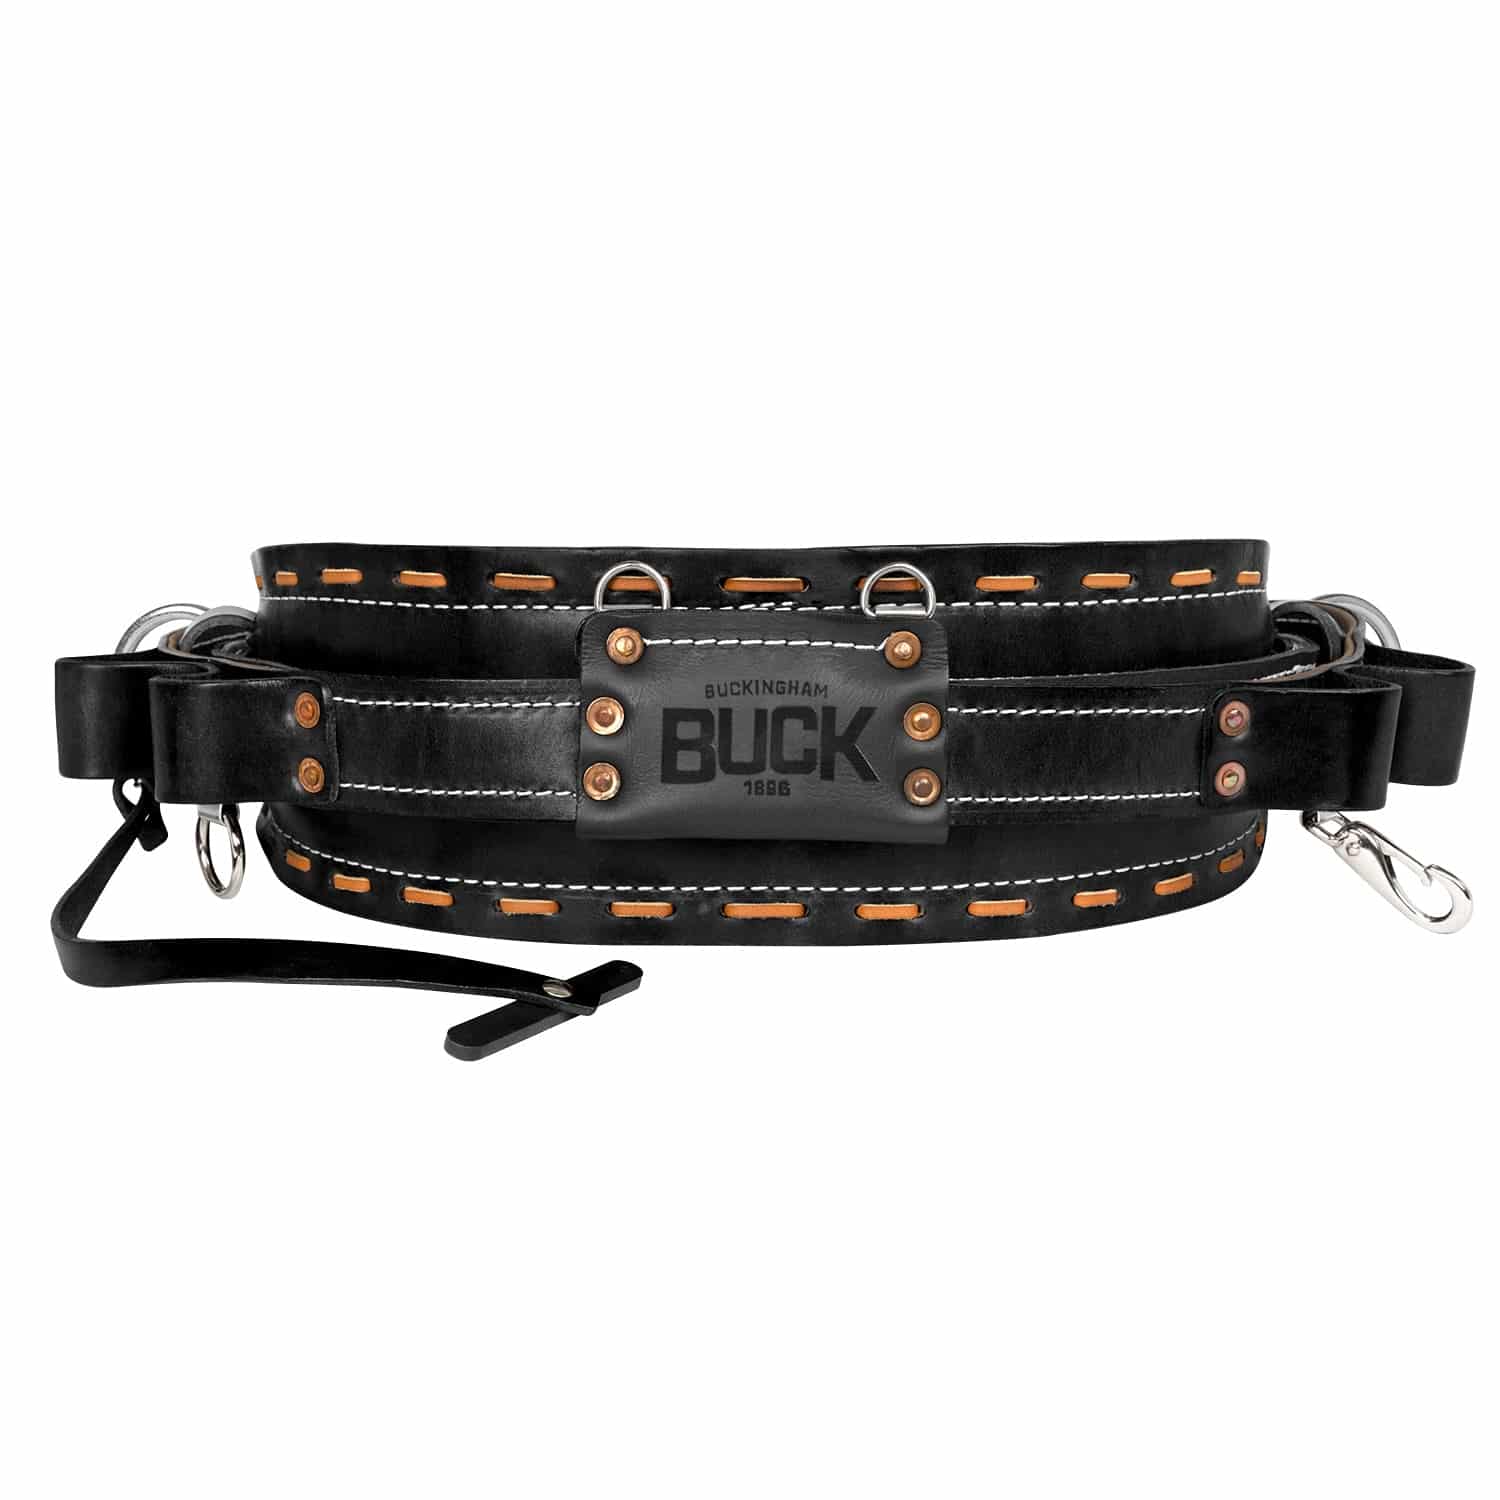 Buckingham 2000EM Black 4 D-Ring Body Belt from Columbia Safety